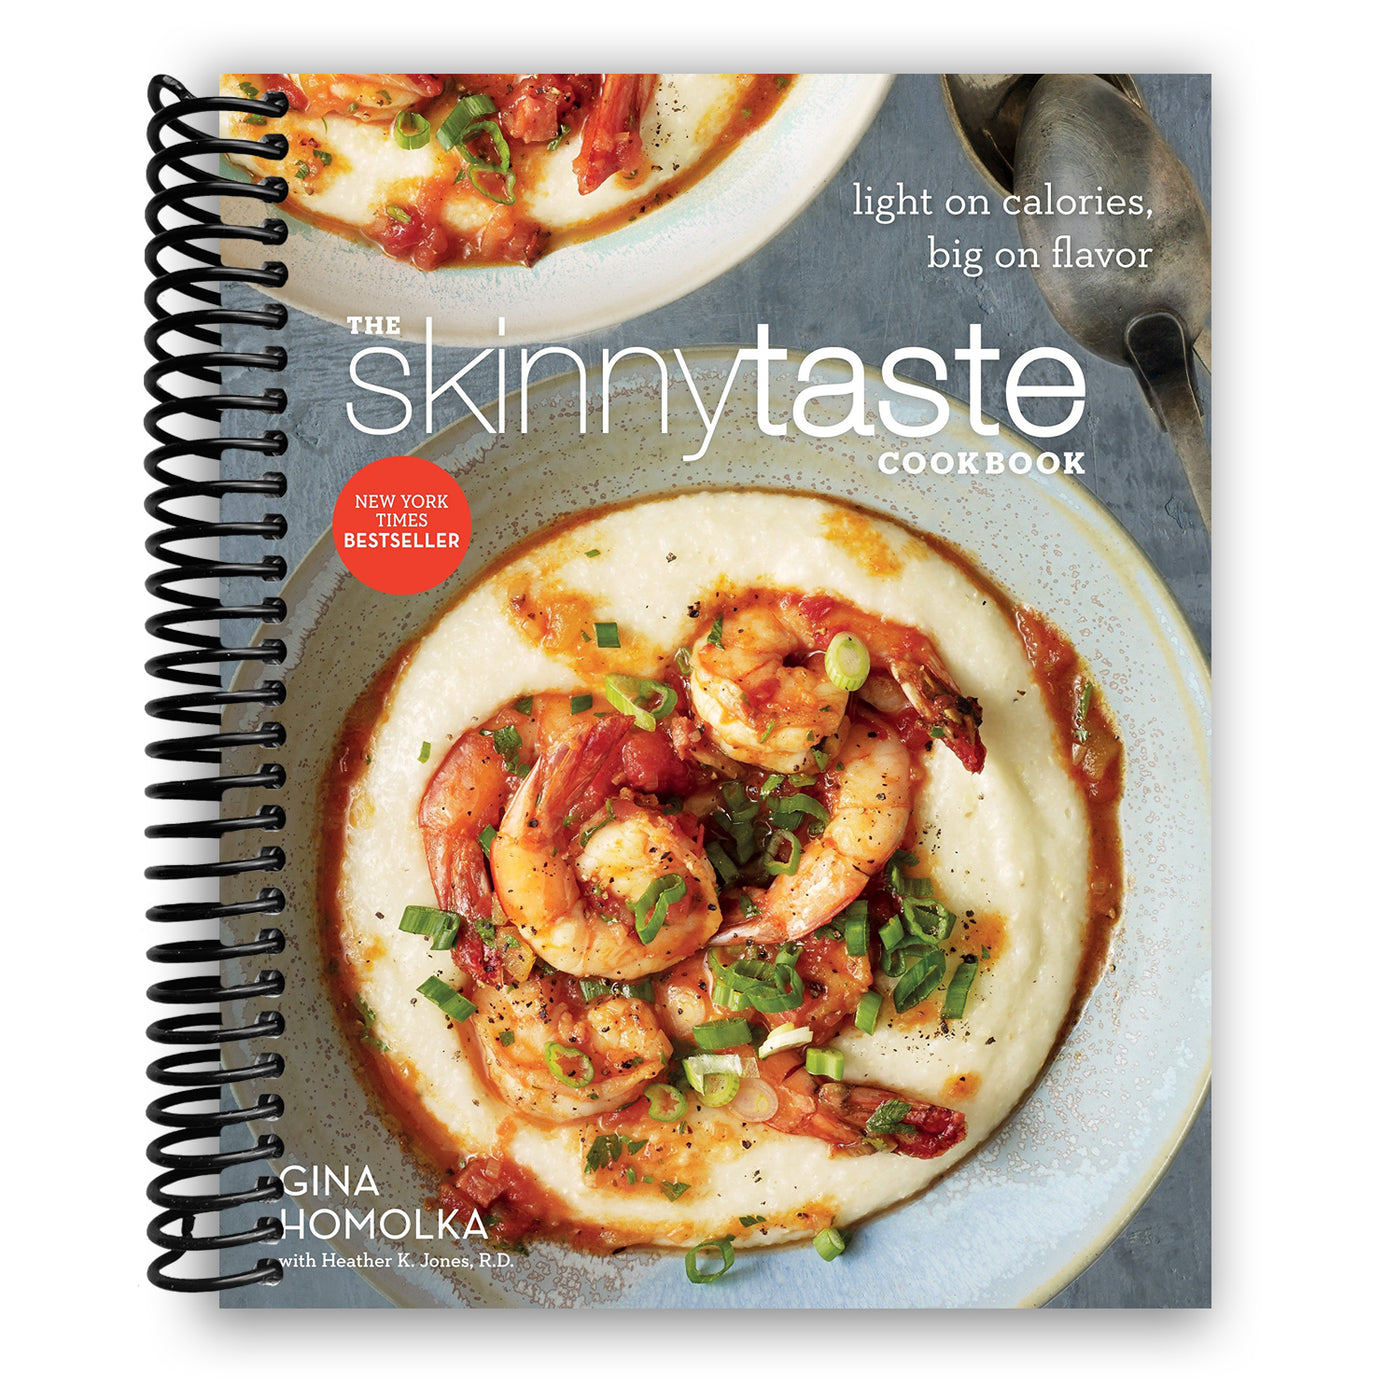 The Skinnytaste Cookbook: Light on Calories, Big on Flavor (Spiral Bound)